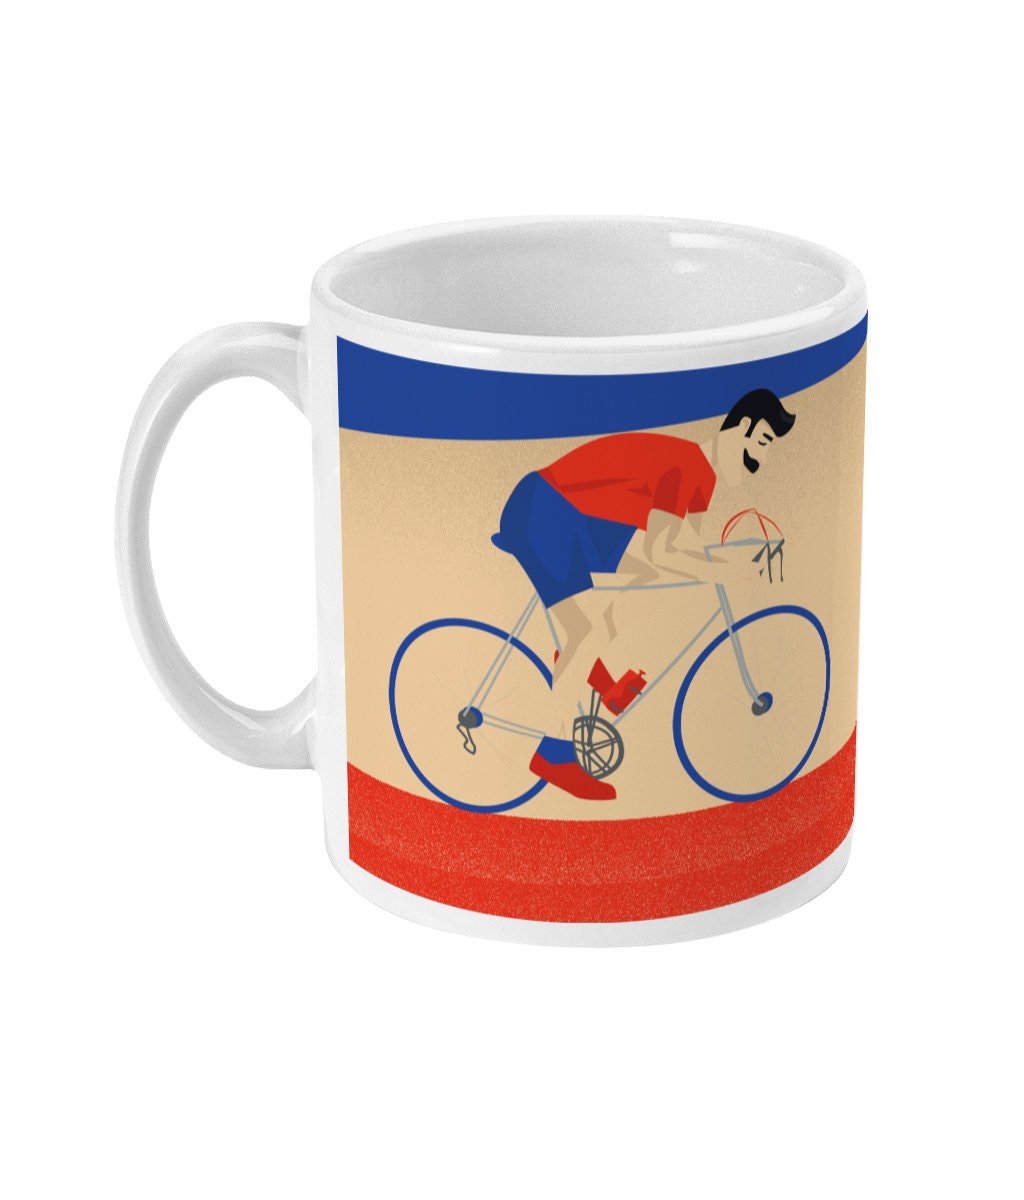 Cycling cup or mug "Monsieur Vélo" - Customizable